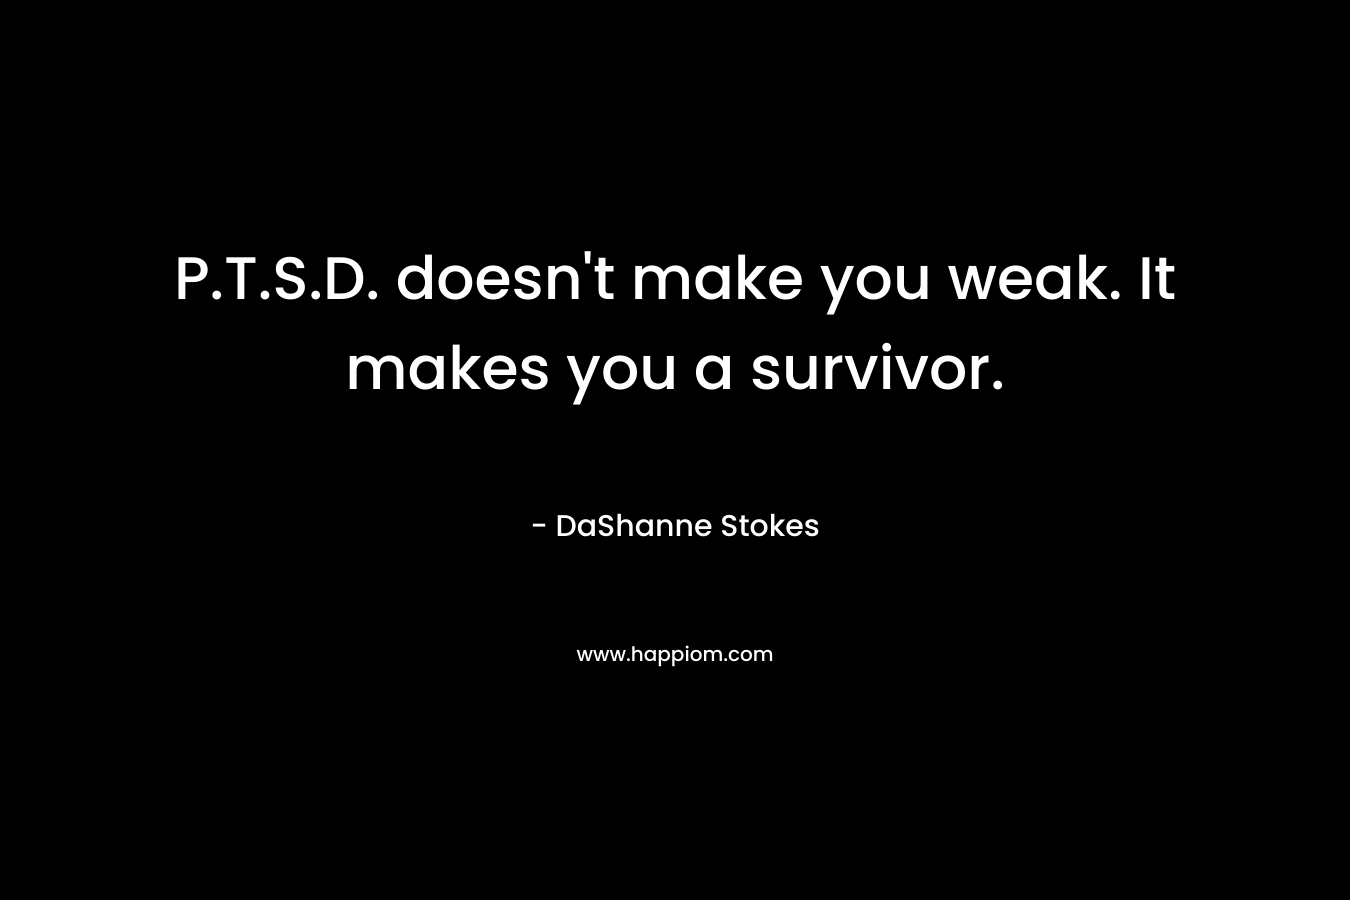 P.T.S.D. doesn’t make you weak. It makes you a survivor. – DaShanne Stokes